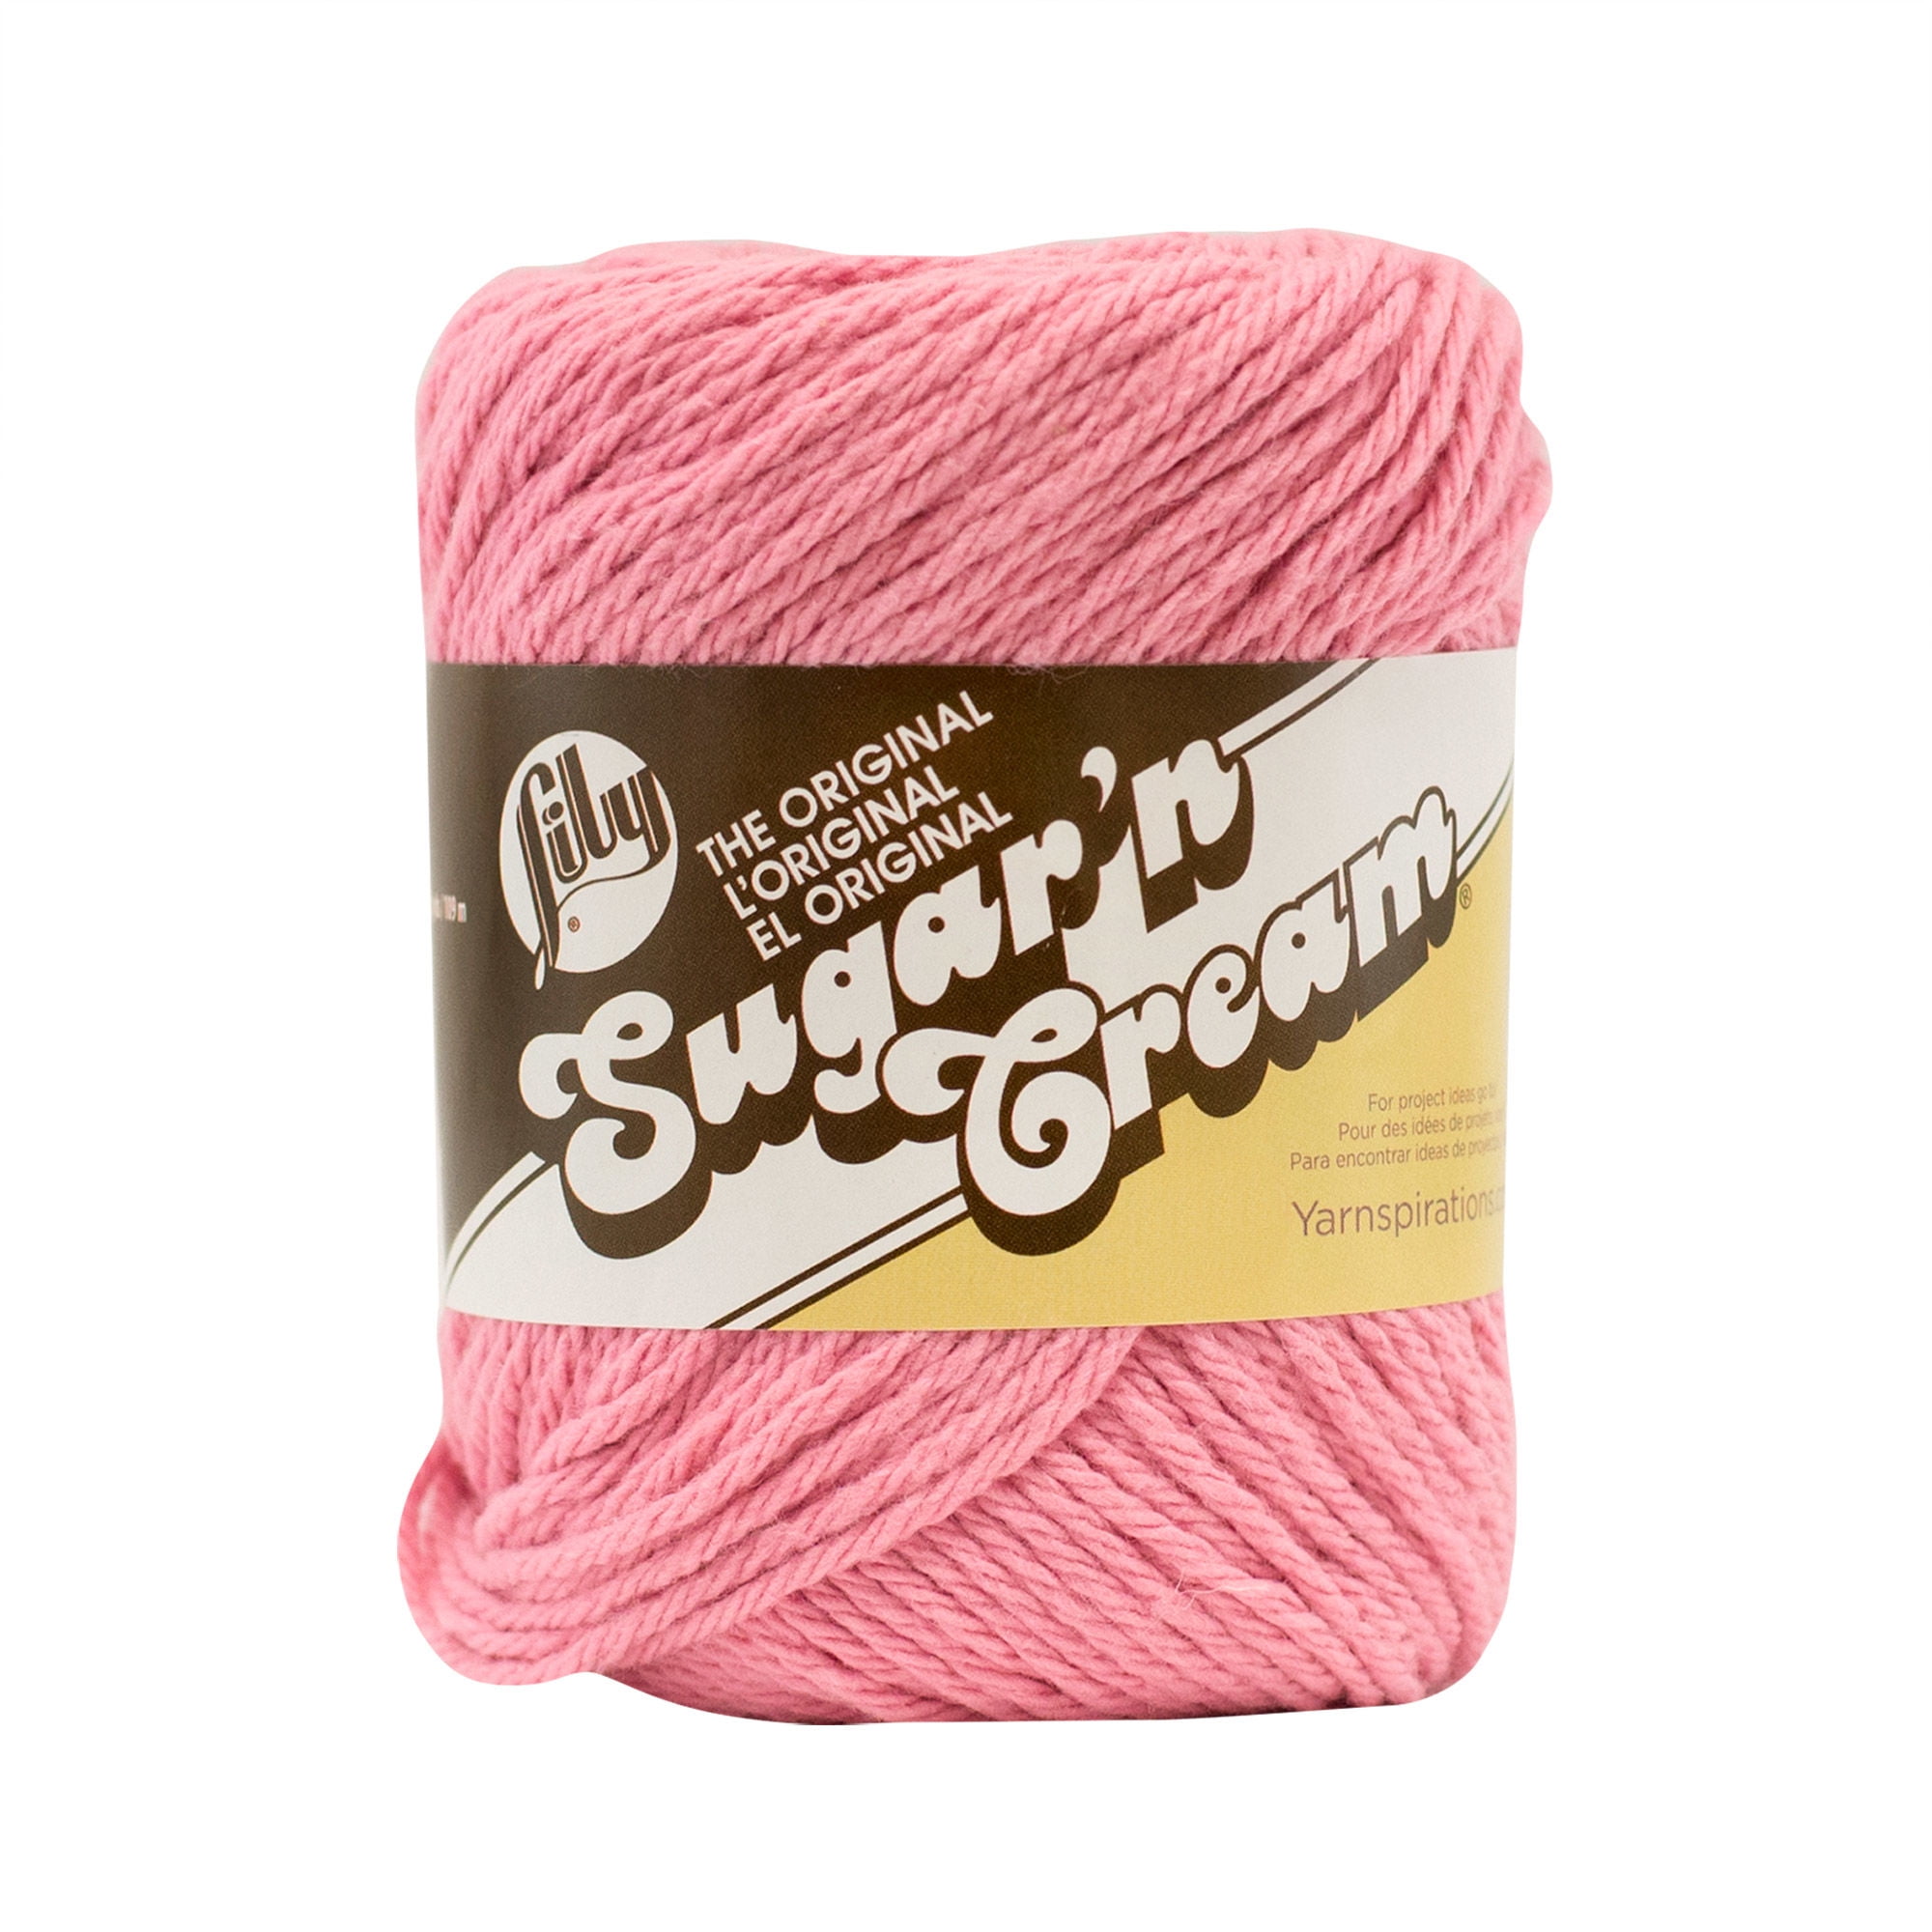 Lily Sugar'n Cream Yarn - Solids Super Size-Hot Pink